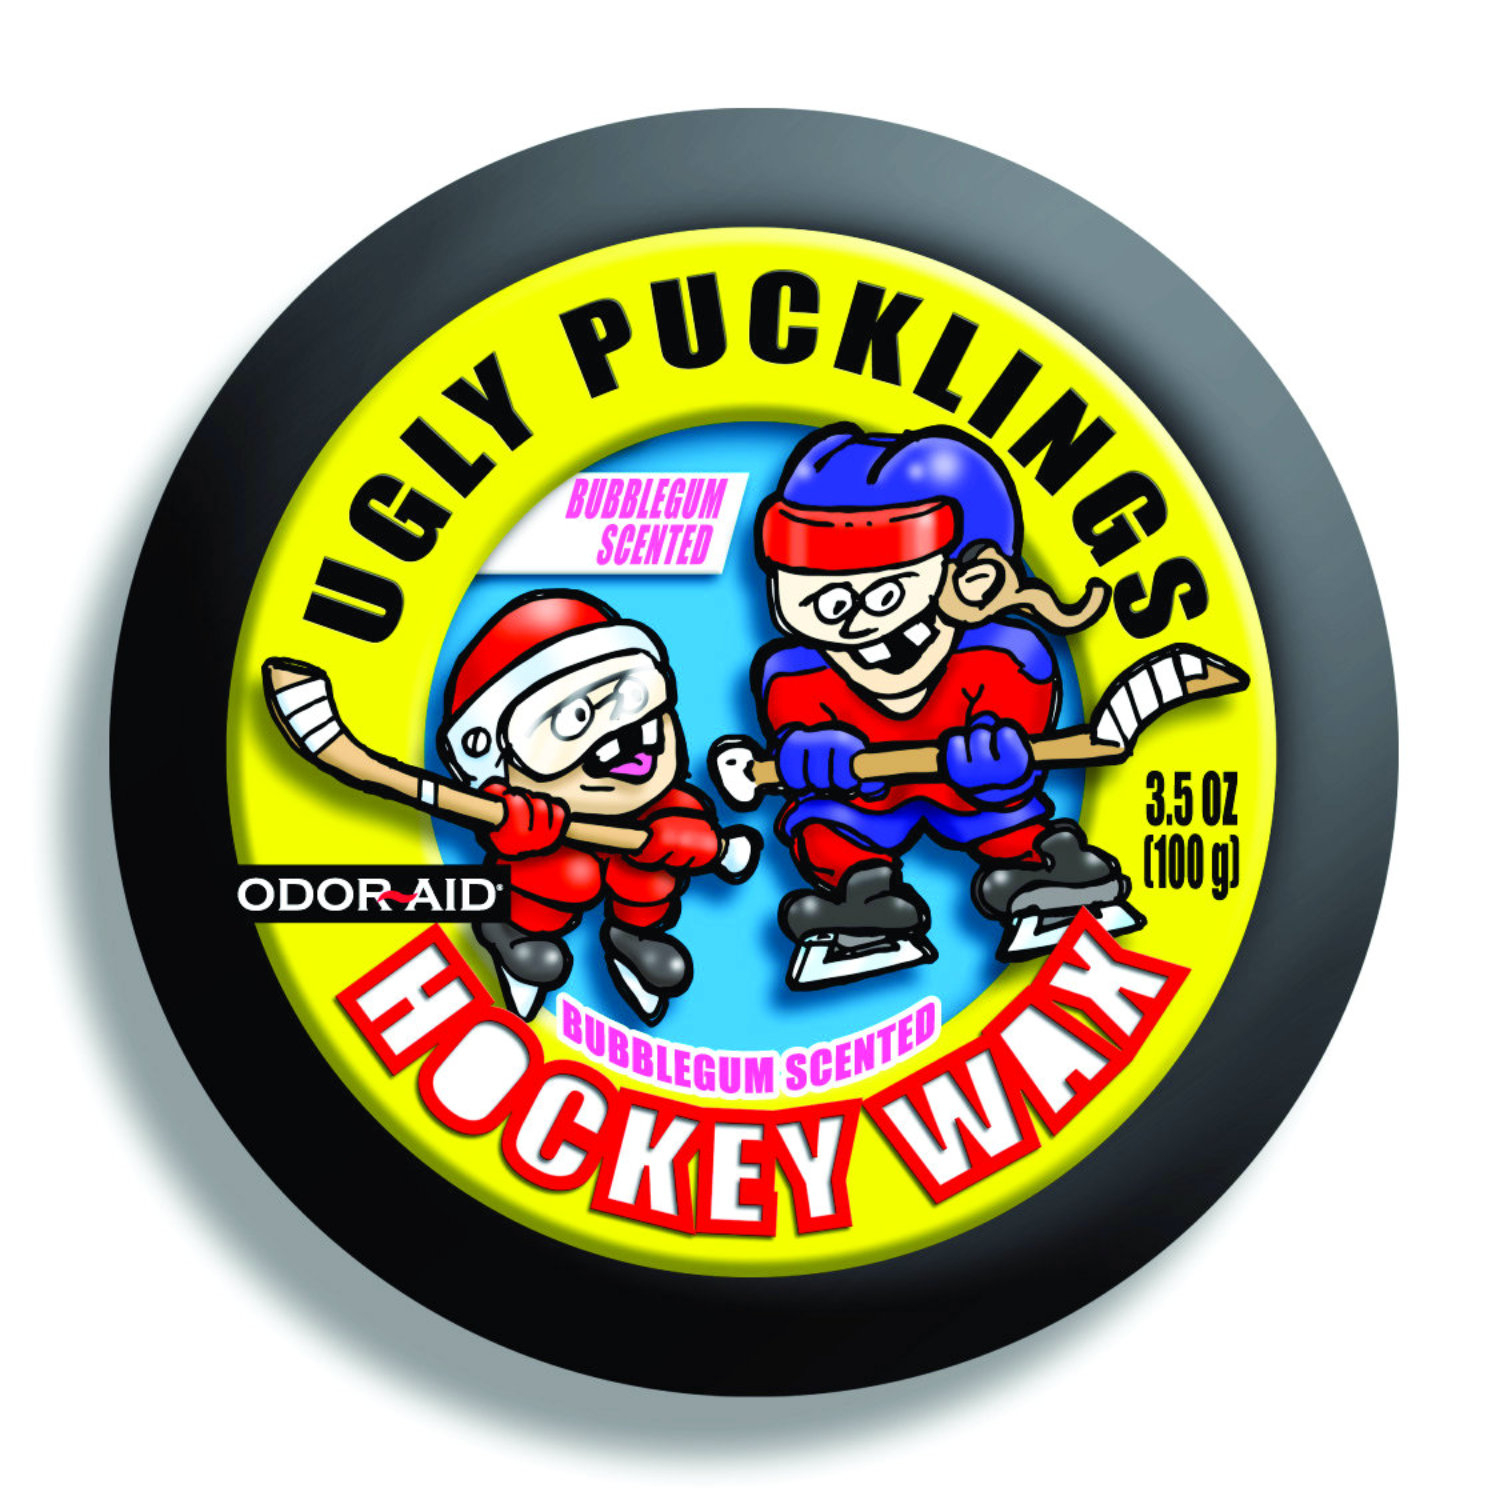  Big Wahs Hockey Stick Wax Push Up 75 Grams Premium Tacky Wax  Old Time Hockey Guys Sent Root Beer : Sports & Outdoors